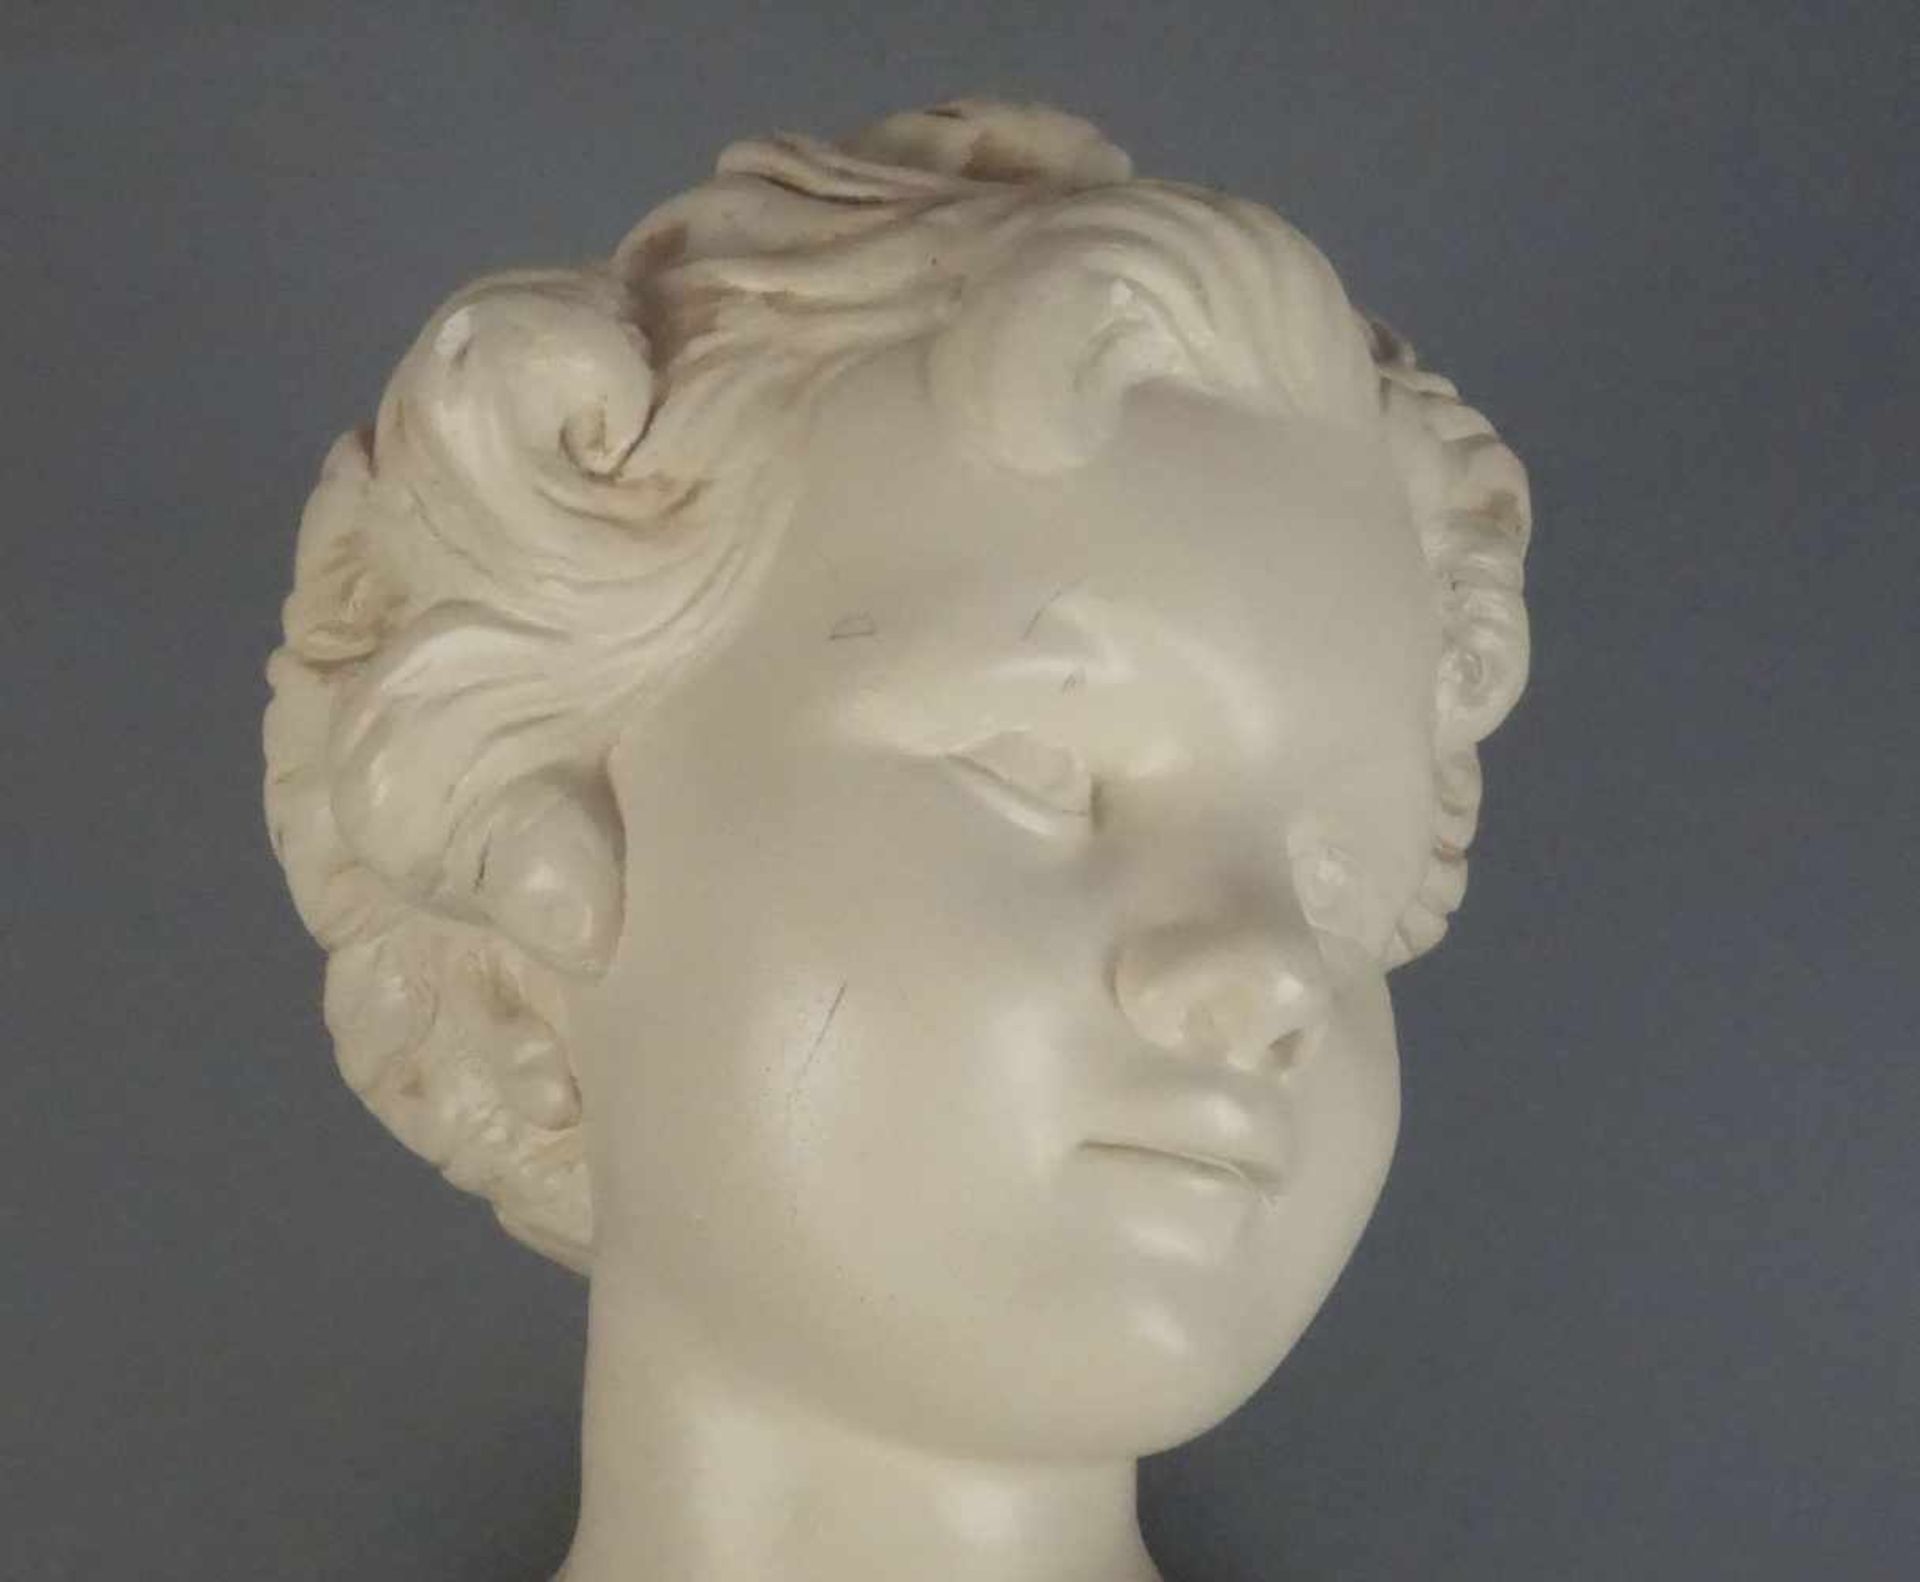 ANONYMER KÜNSTLER DES 20. JH., Skulptur / sculpture: " Büste eines Knaben", Masseguss / Gipsguss, - Bild 5 aus 5